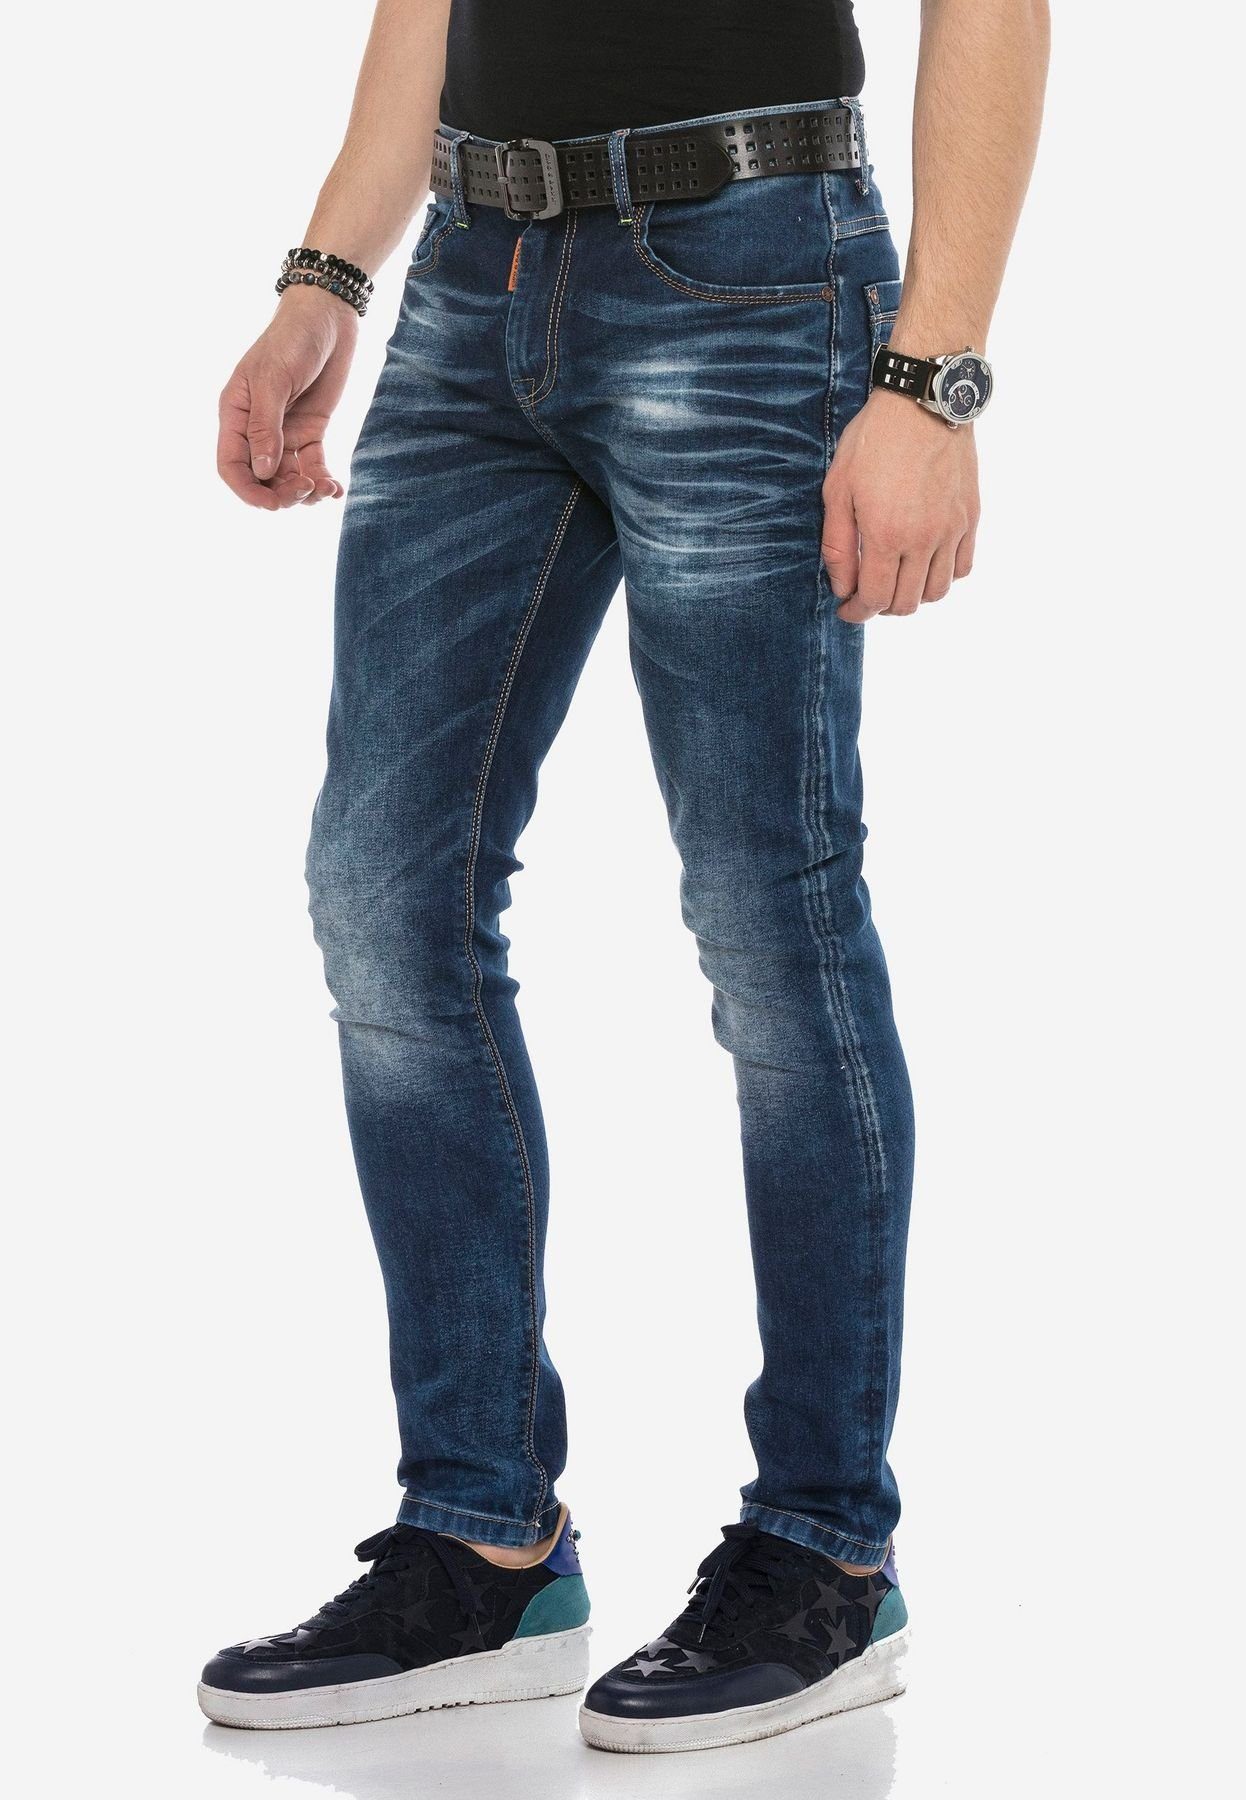 Baxx & Straight-Jeans Cipo